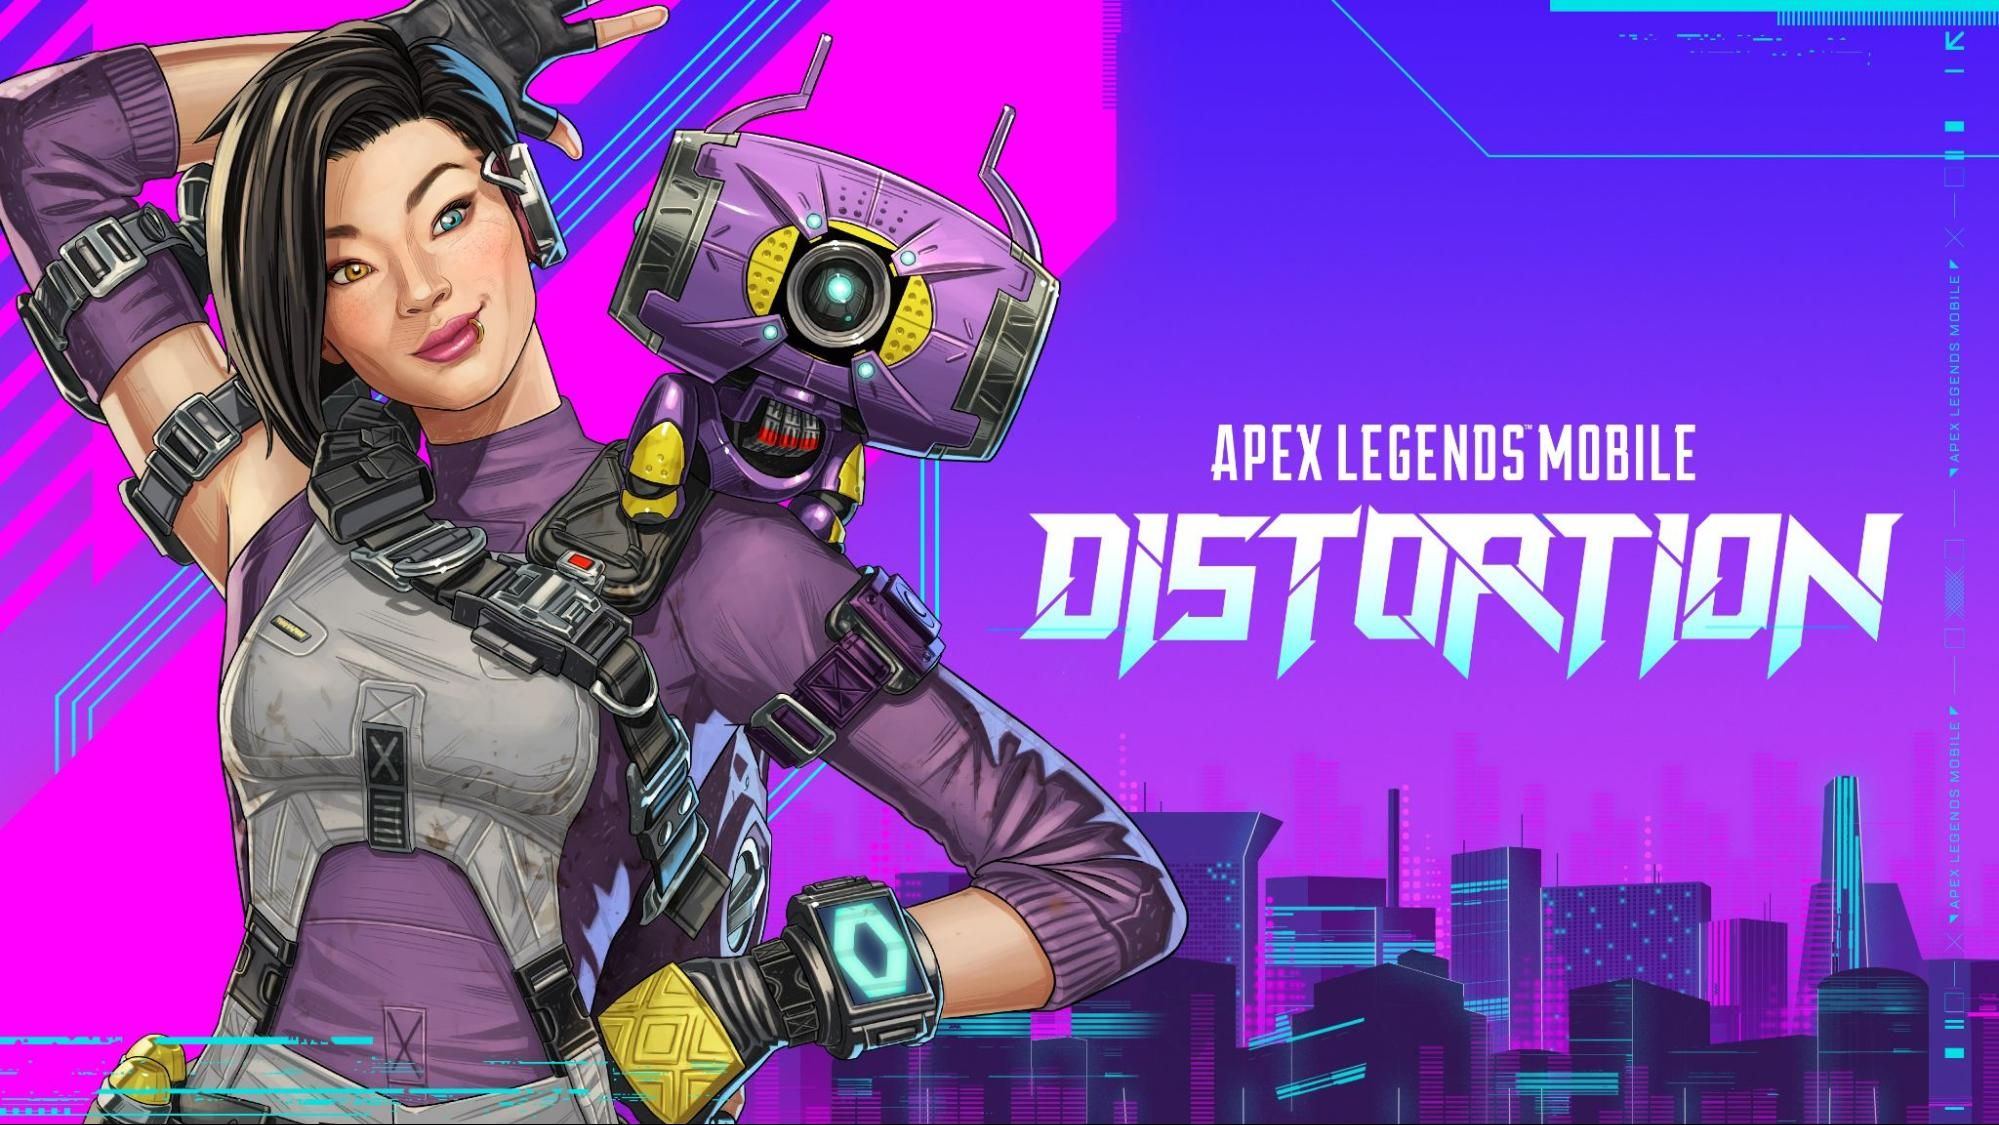 APEX Legends Mobile Season 2, Distortion